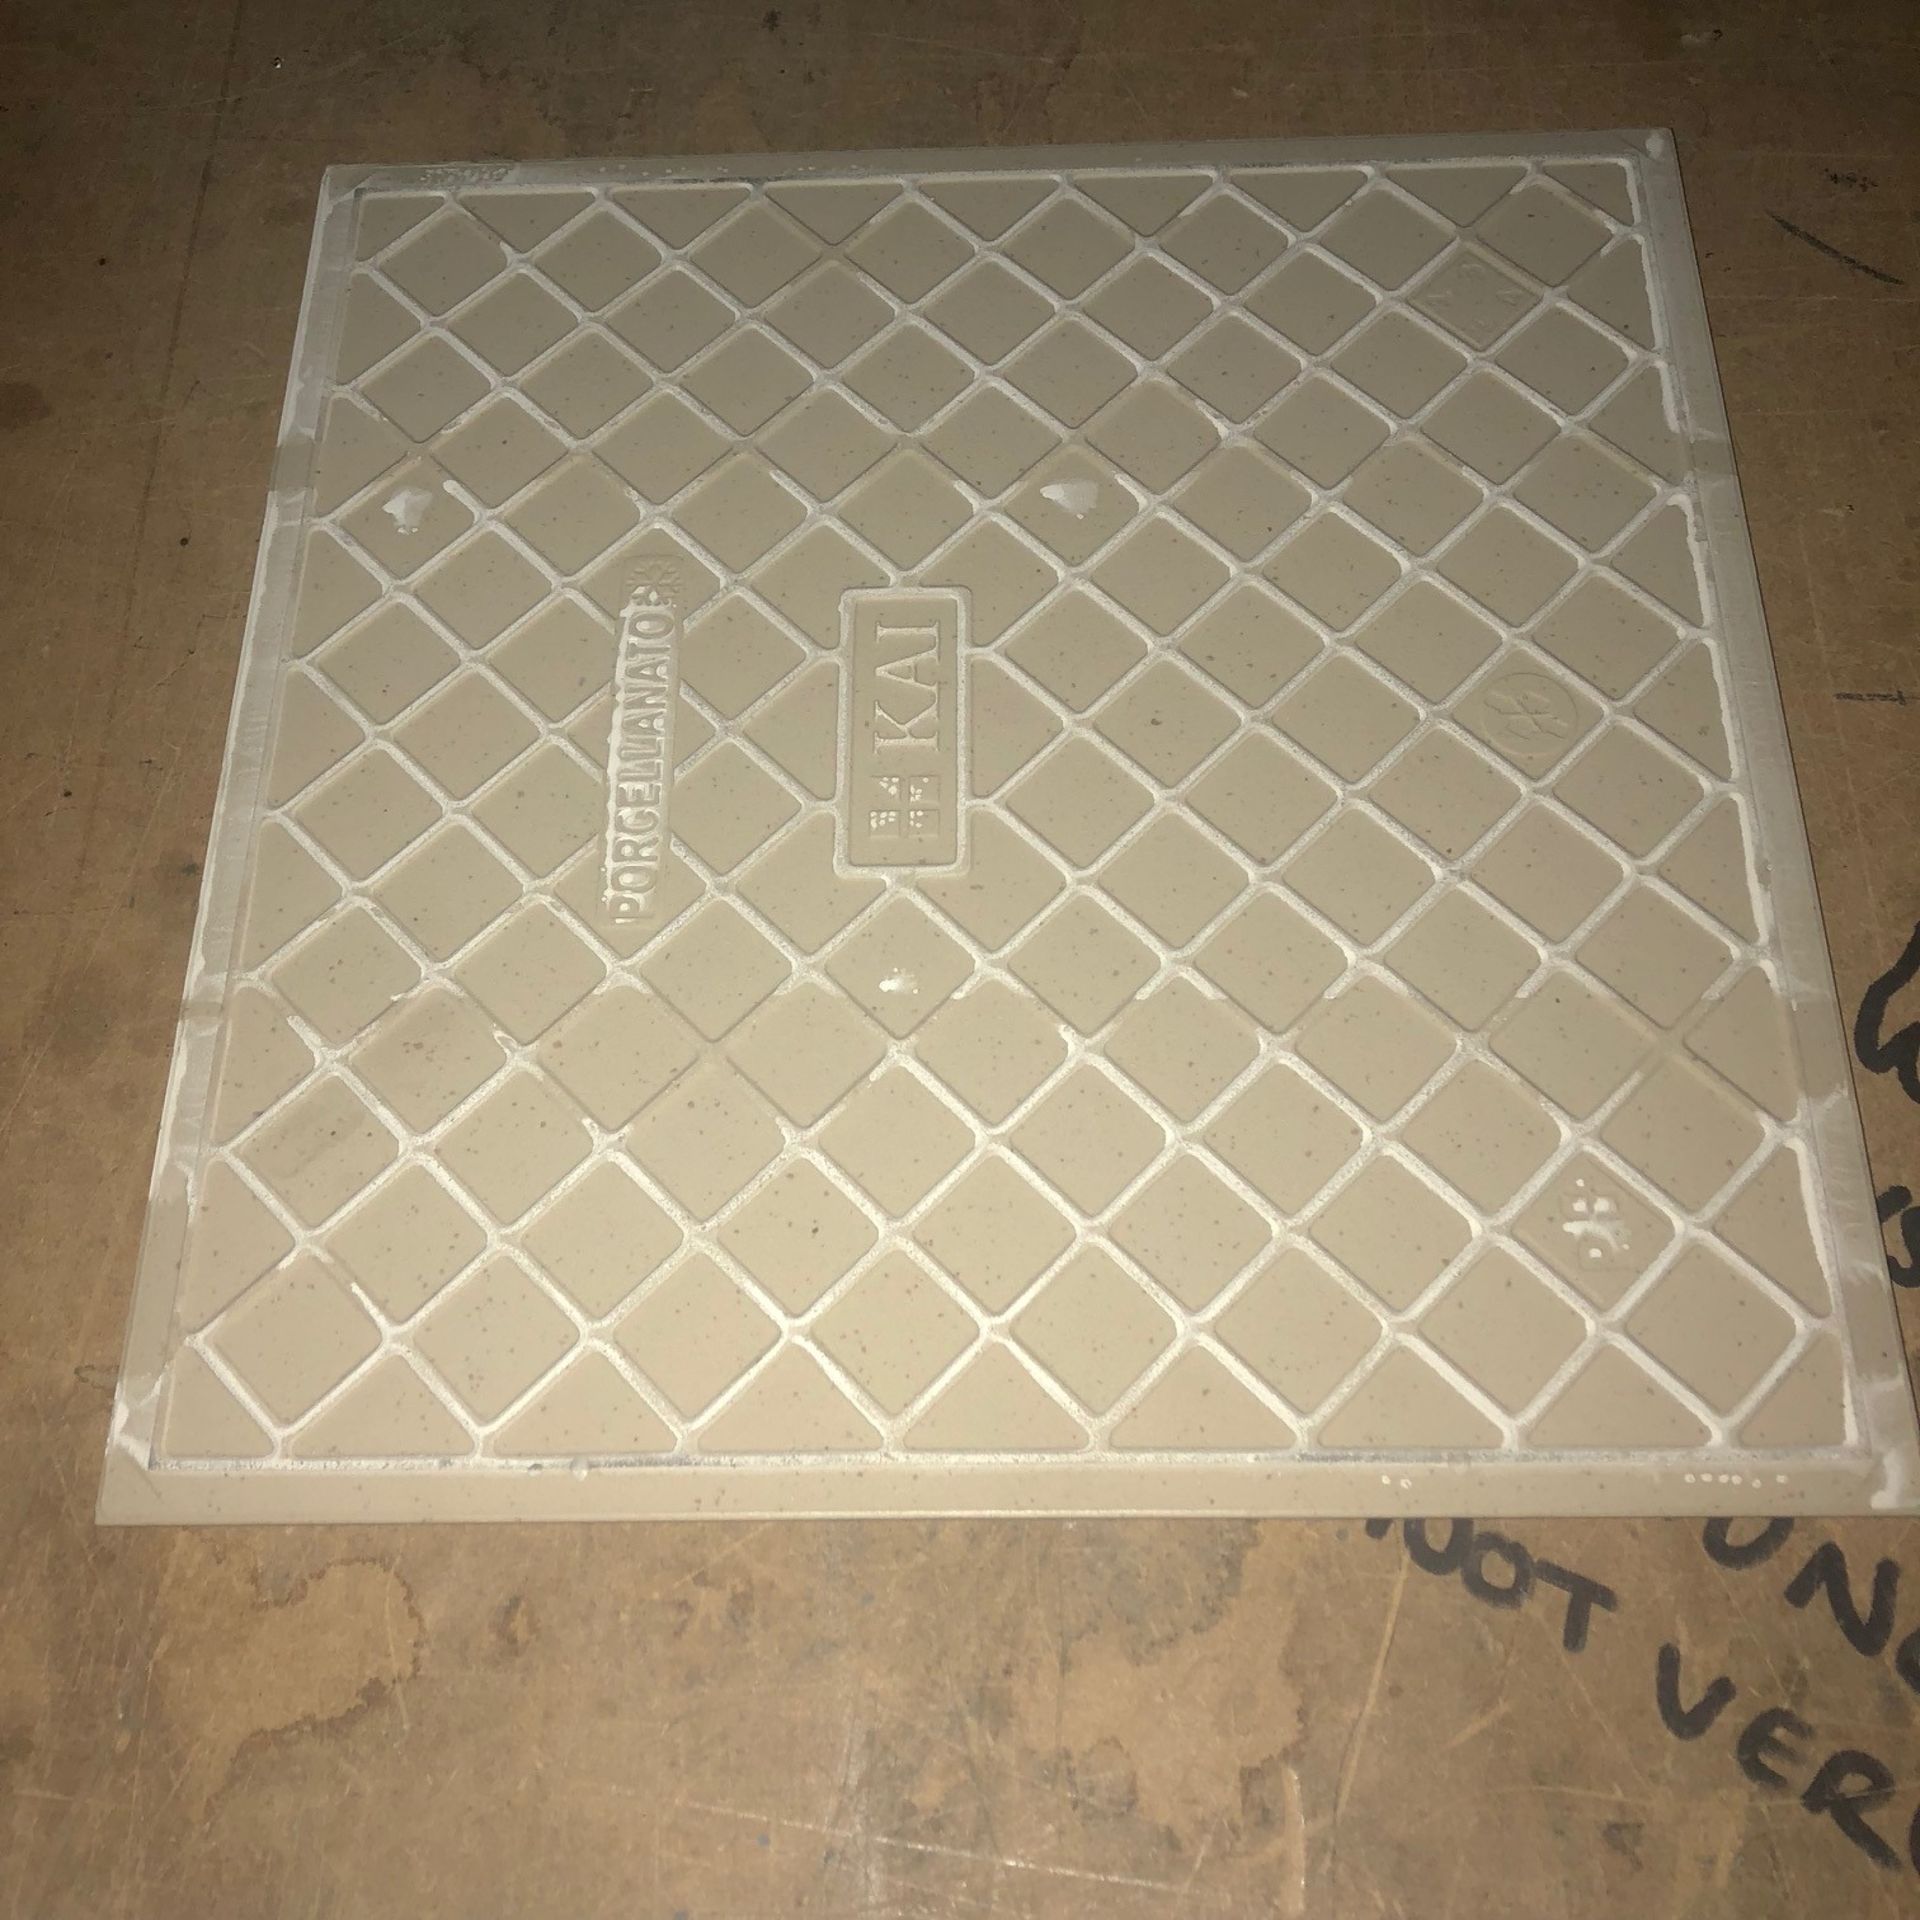 14 x Packs of Umbria Tiles in White - 9 Per Pack - 33cm x 33cm - Image 4 of 4